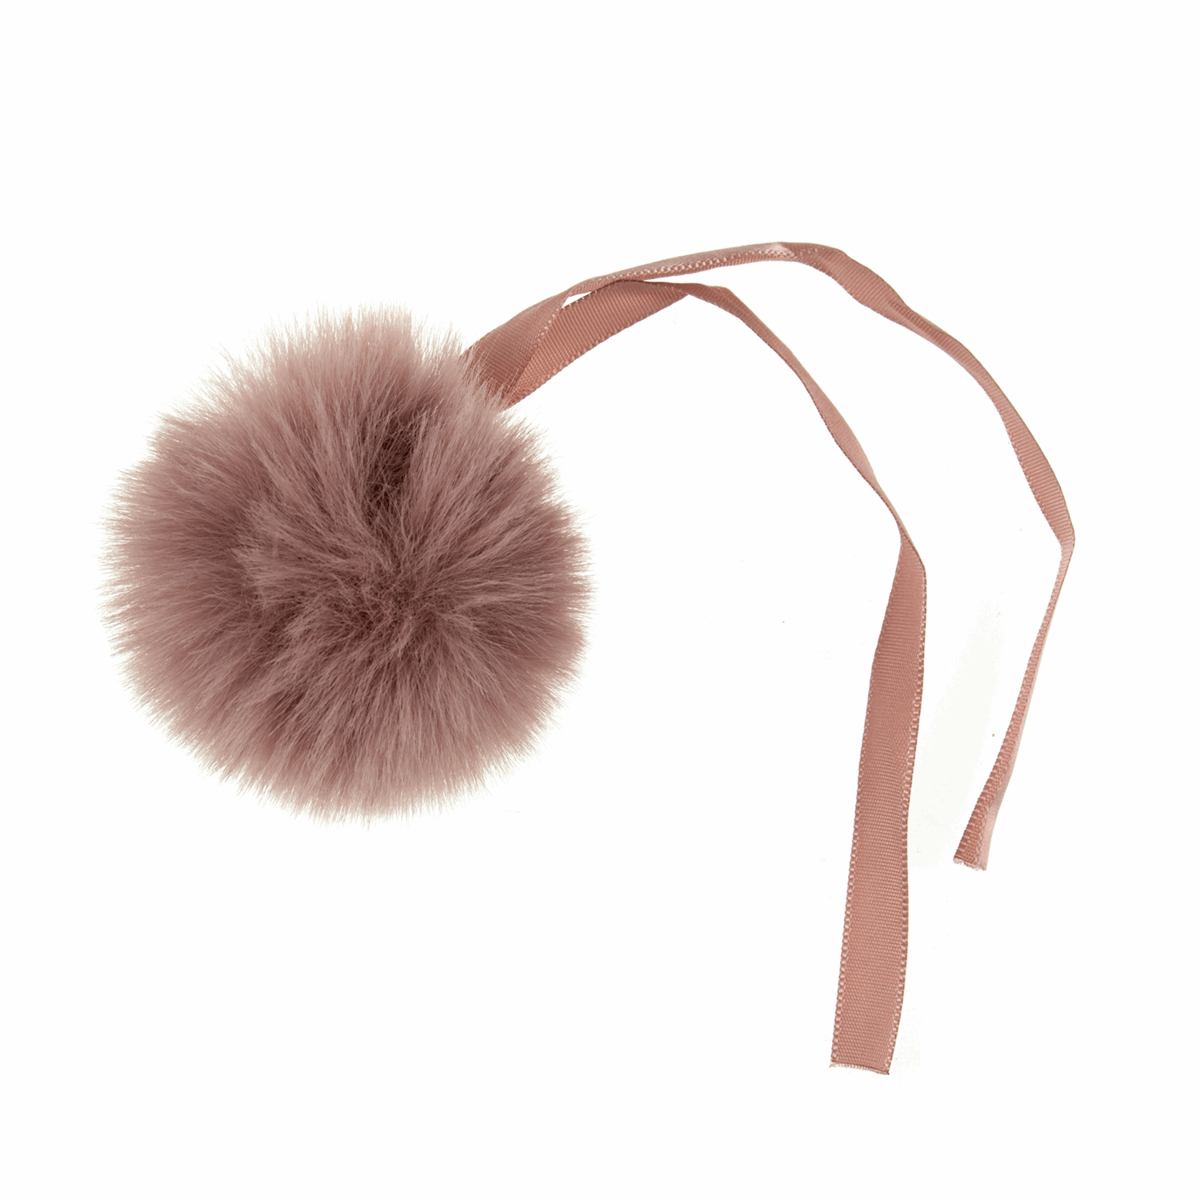 Trimits Faux Fur Super Fluffy Pom Pom - Pink 6cm (Medium)